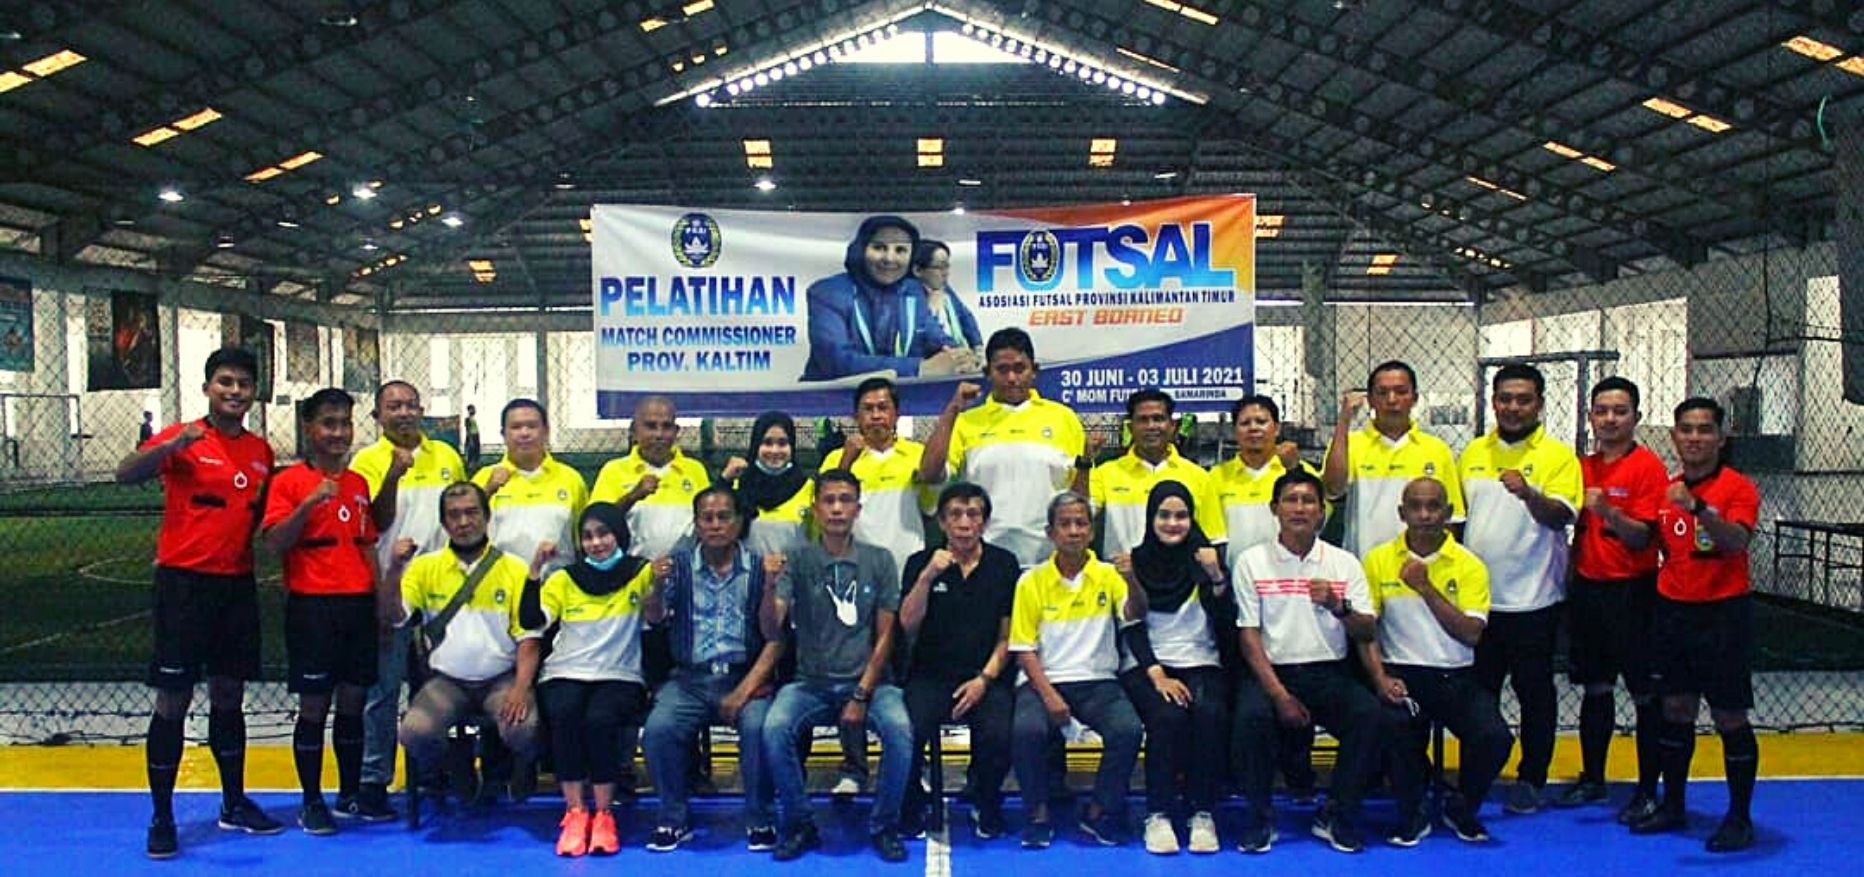 Semangat AFP Kaltim Menggelar Kursus Pengawas Pertandingan Futsal di Tengah Pandemi